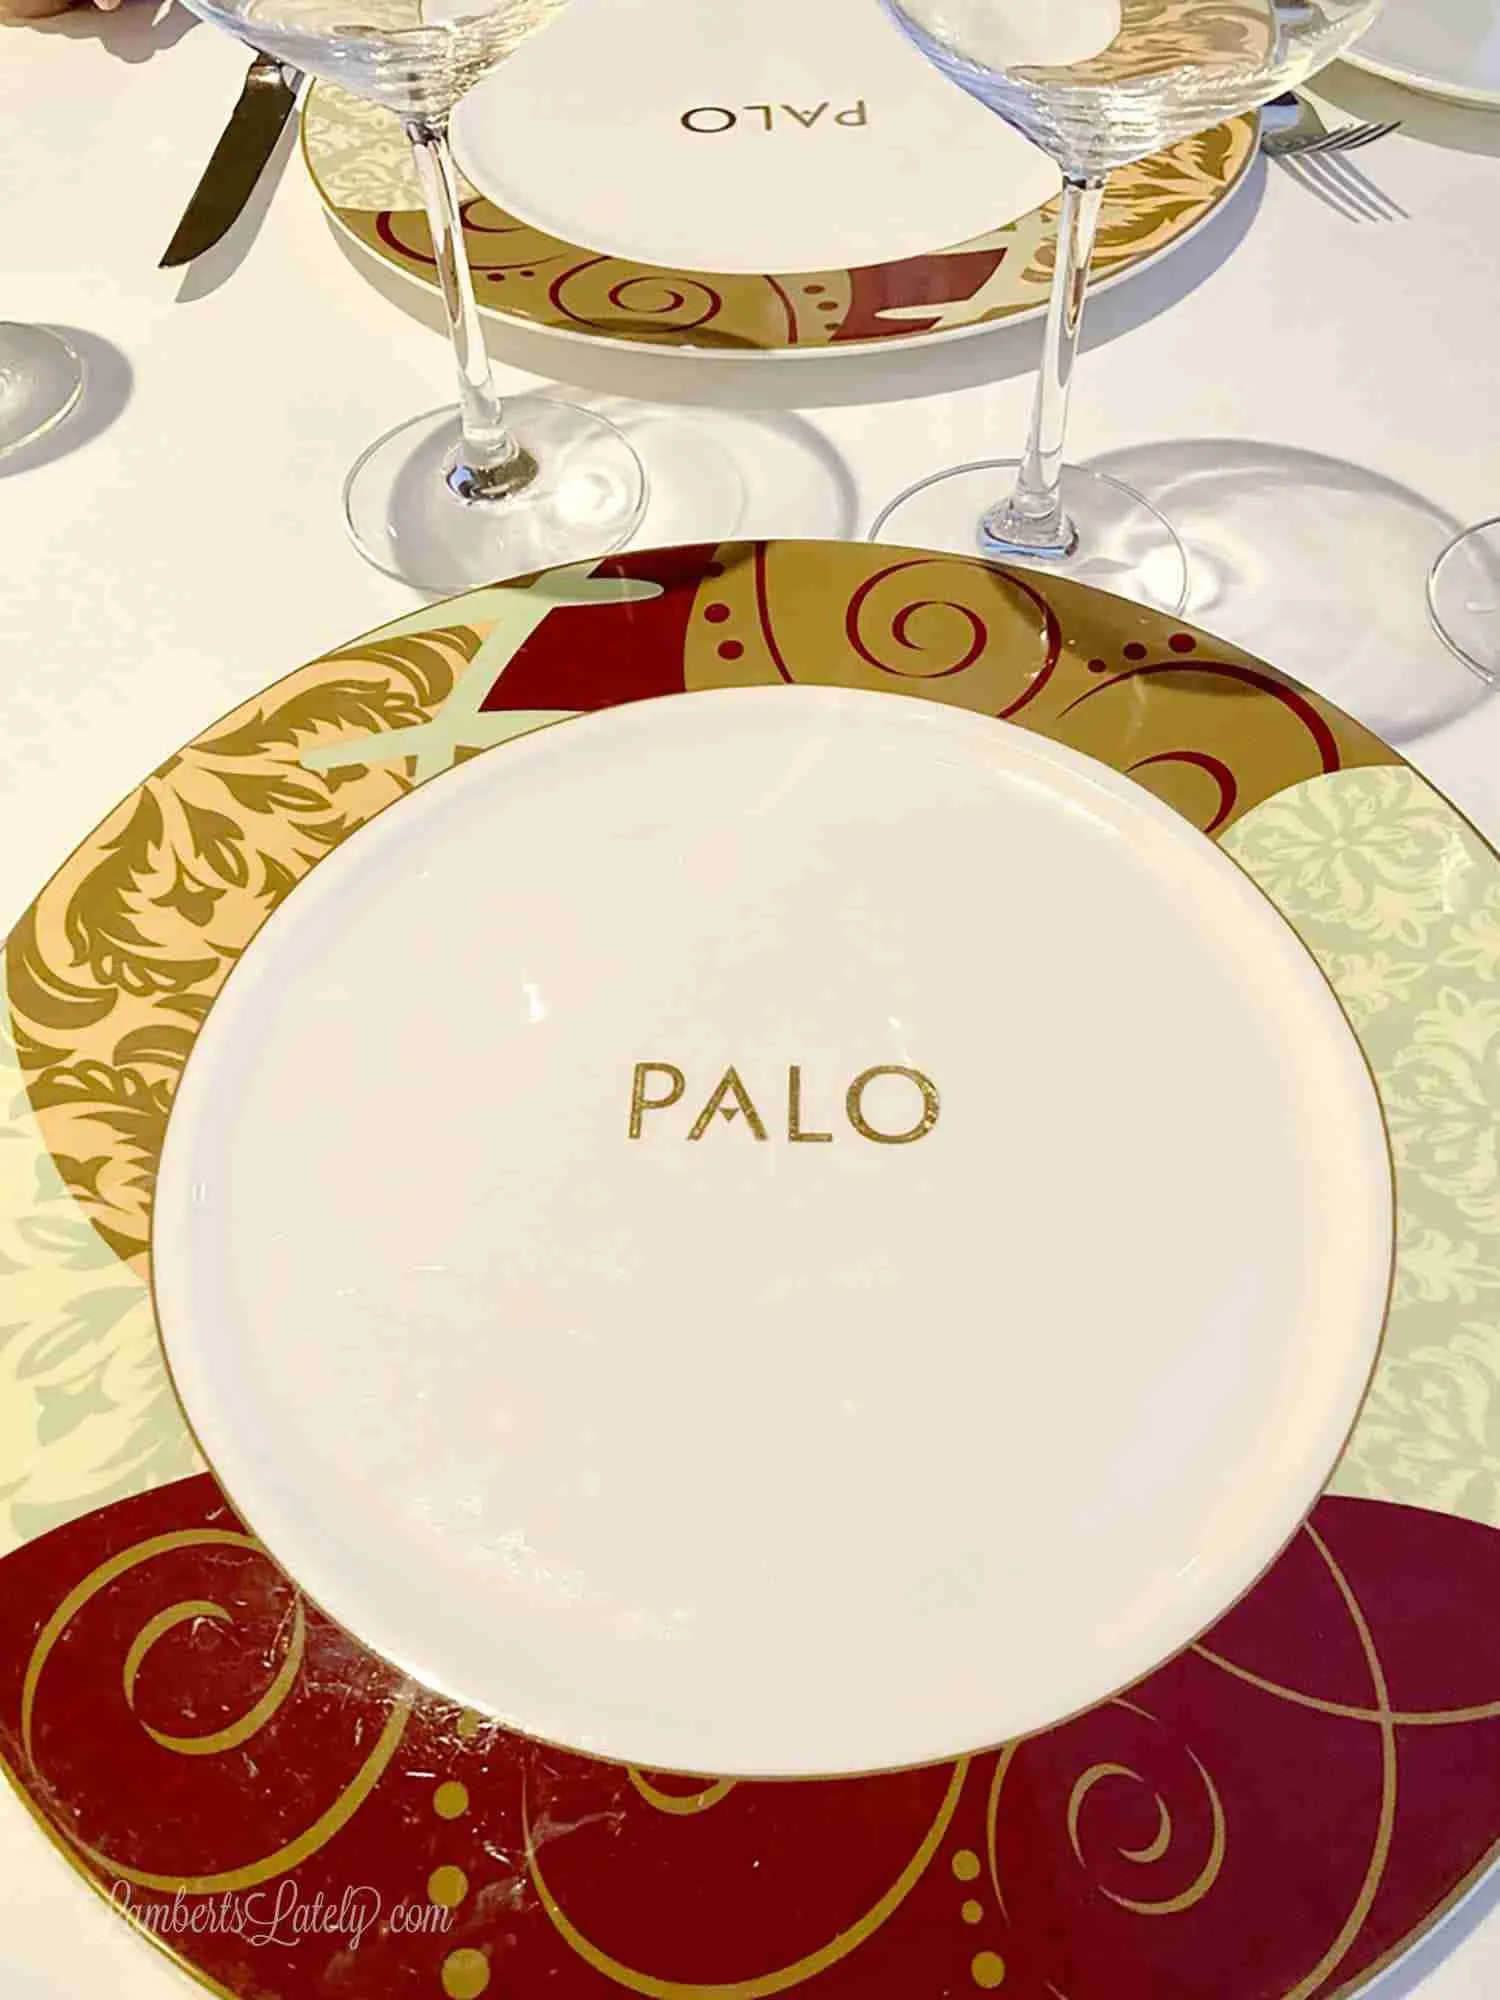 Disney Wonder Palo plate.